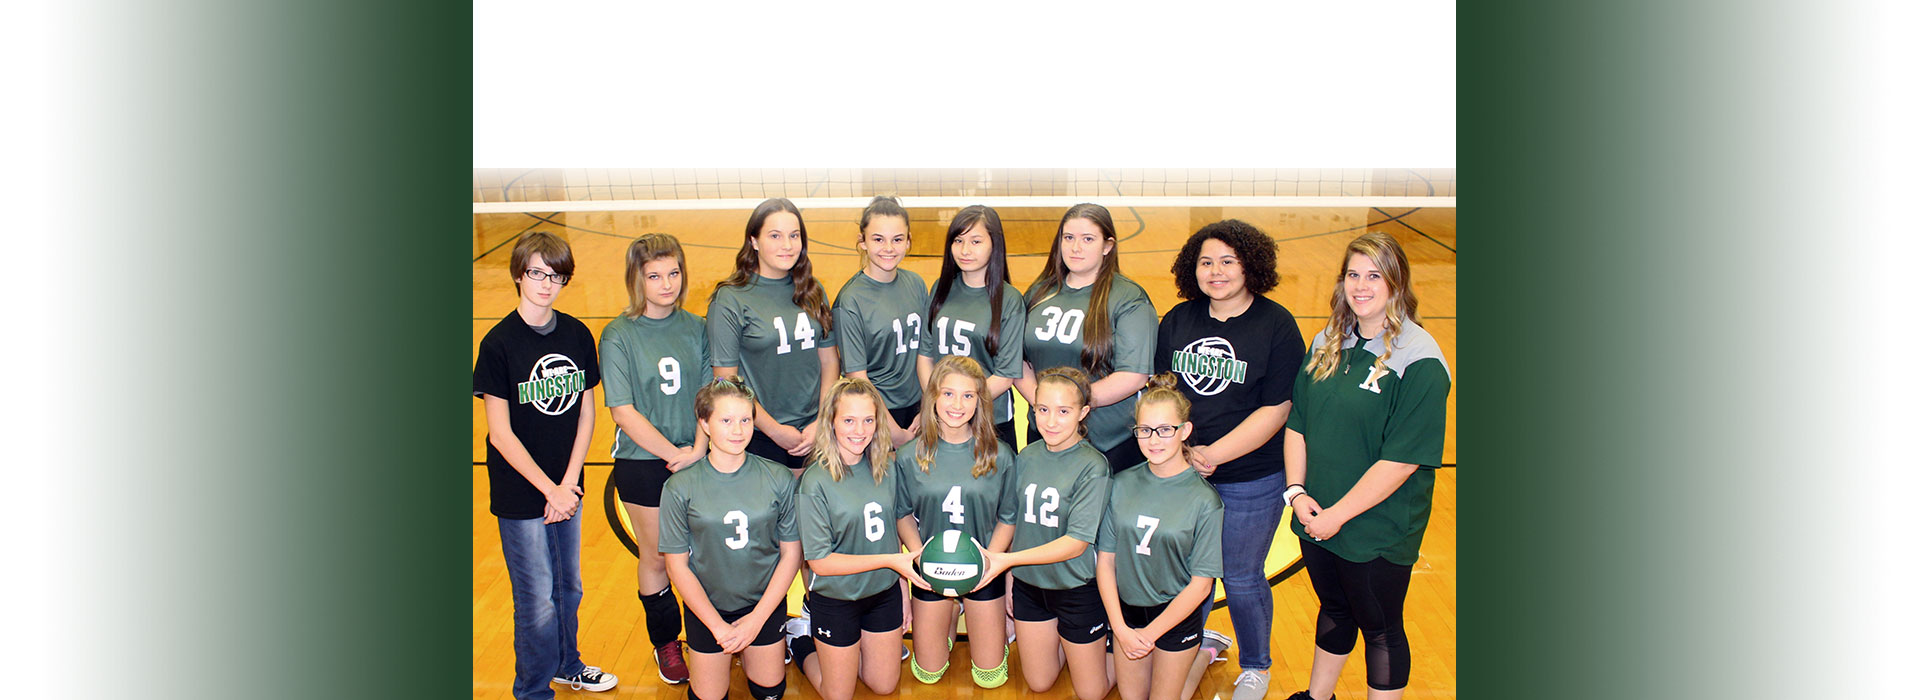 volleyball team - kingston k-14